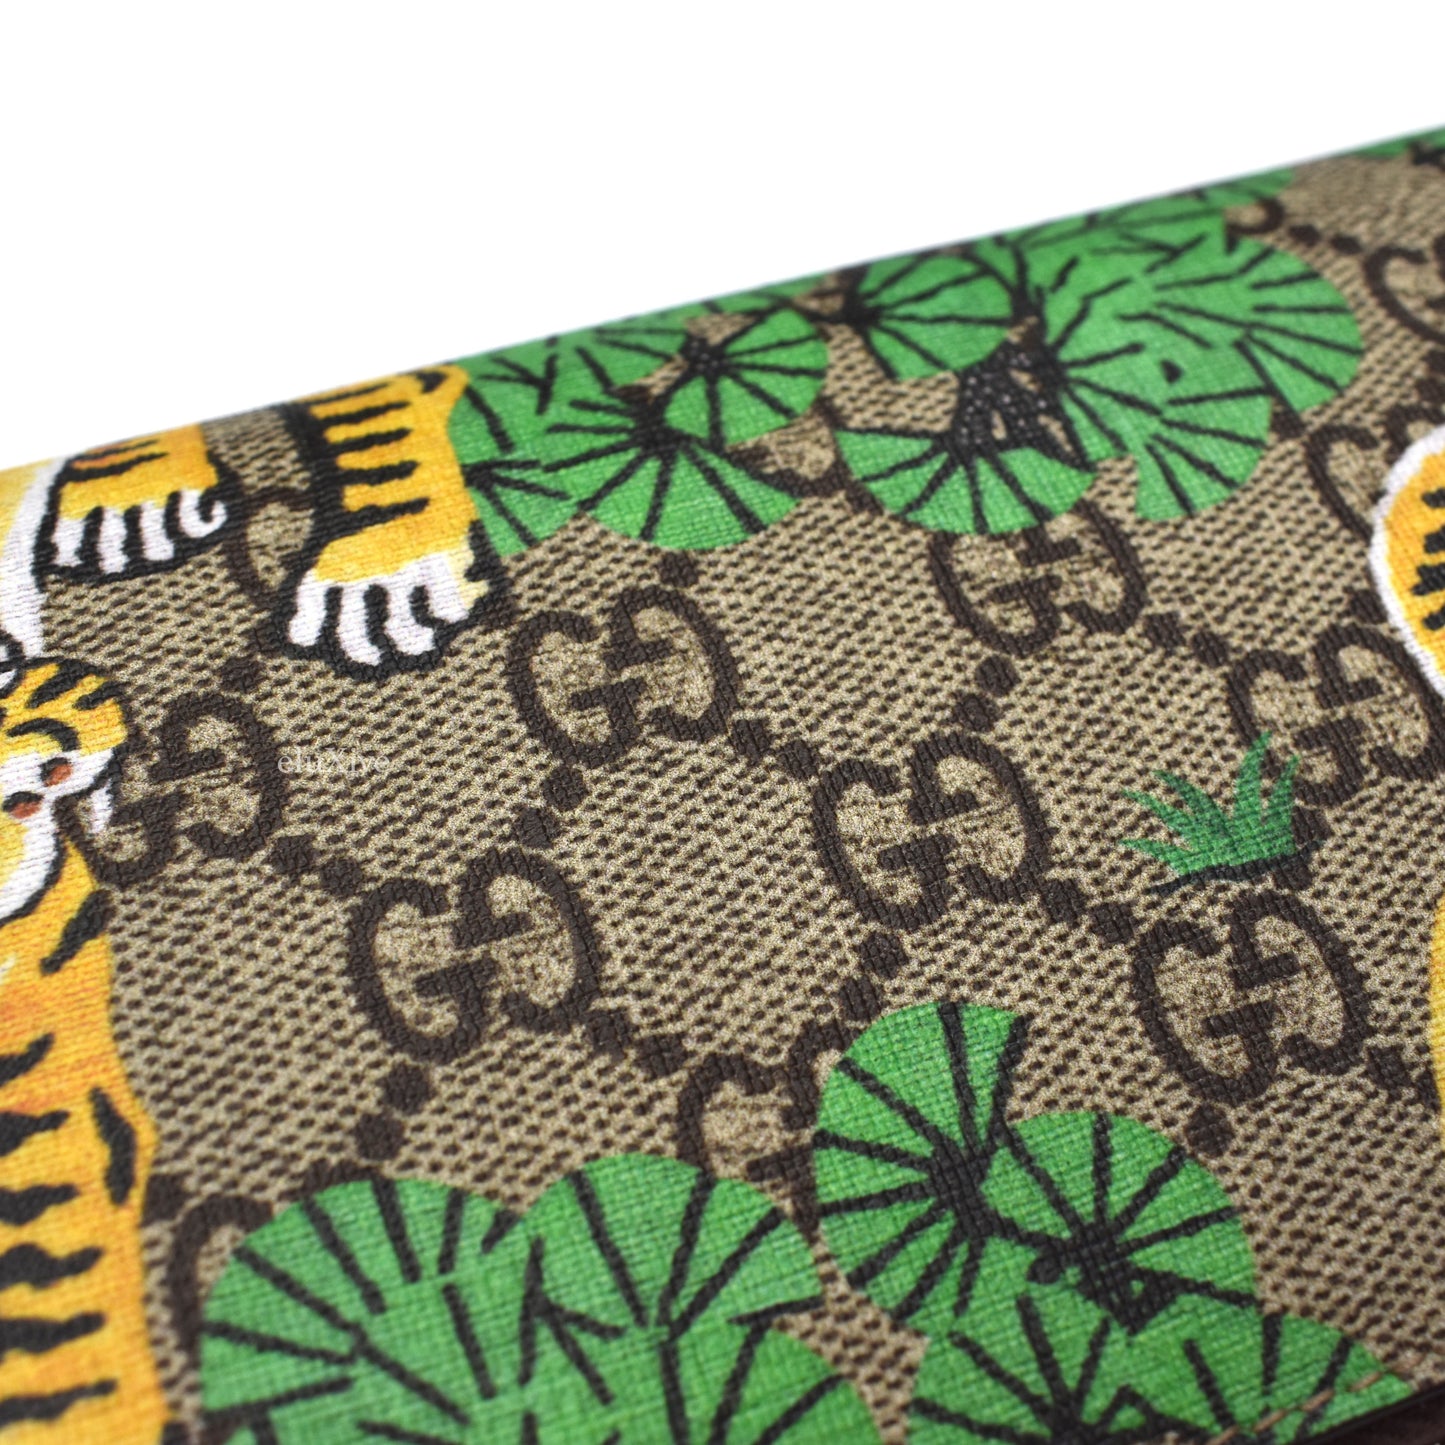 Gucci - GG Supreme Tiger Print Wallet